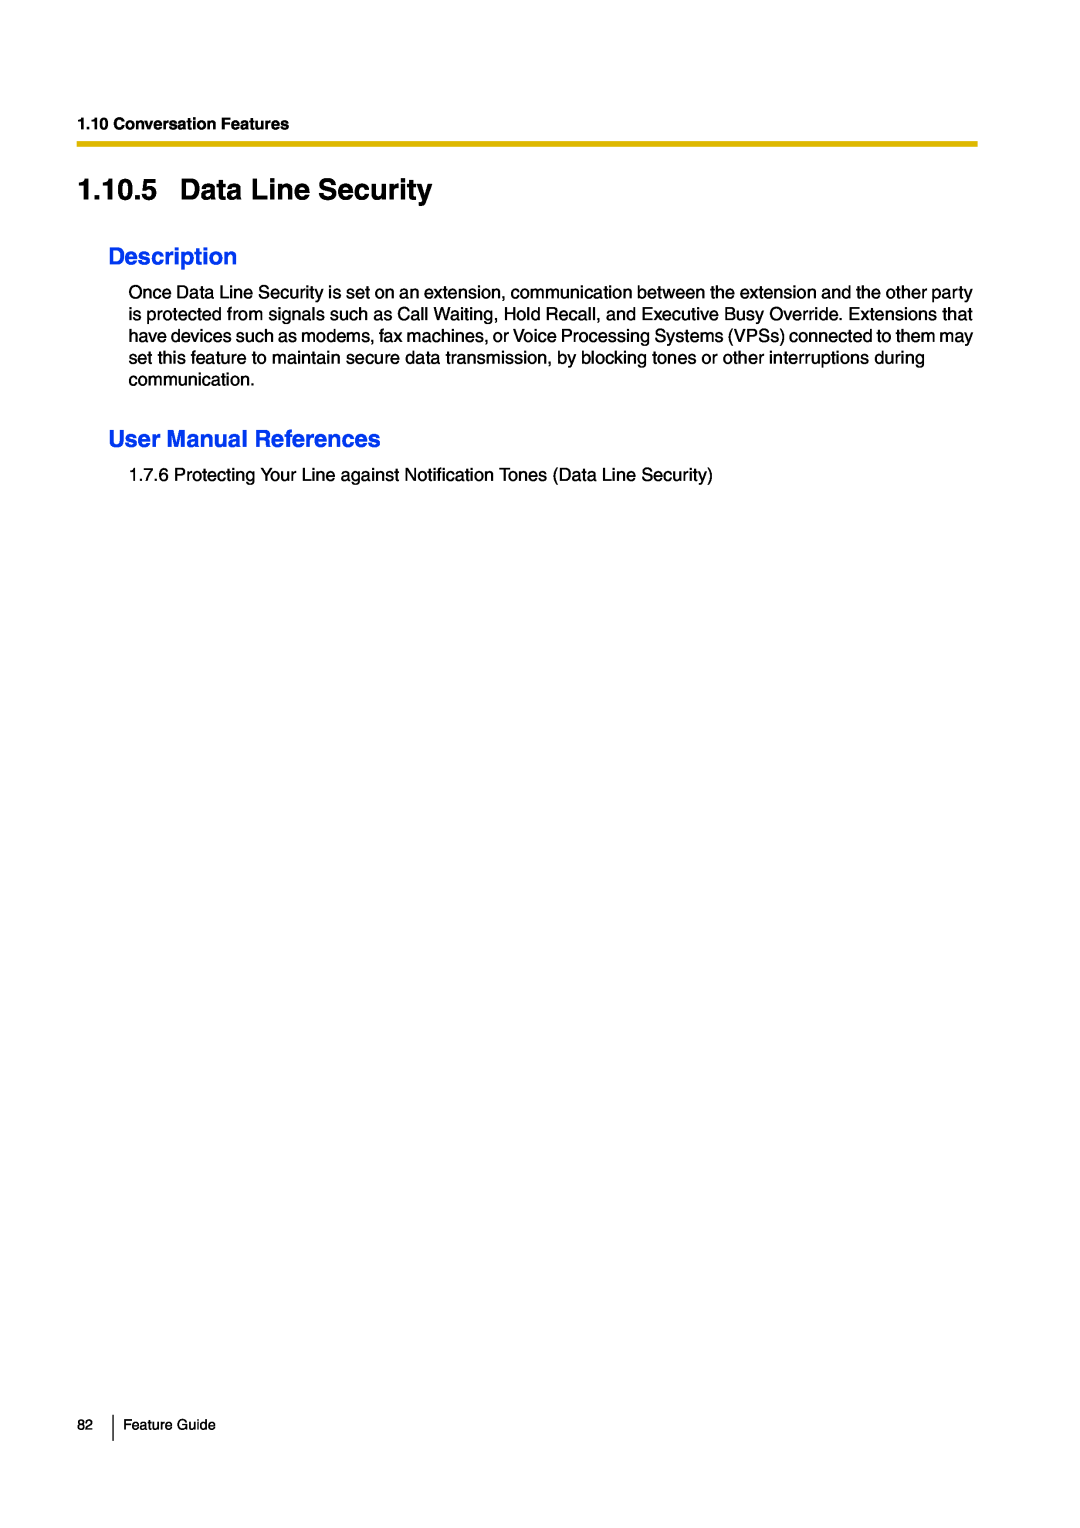 Panasonic kx-tea308 manual Data Line Security, Description, User Manual References, Feature Guide 